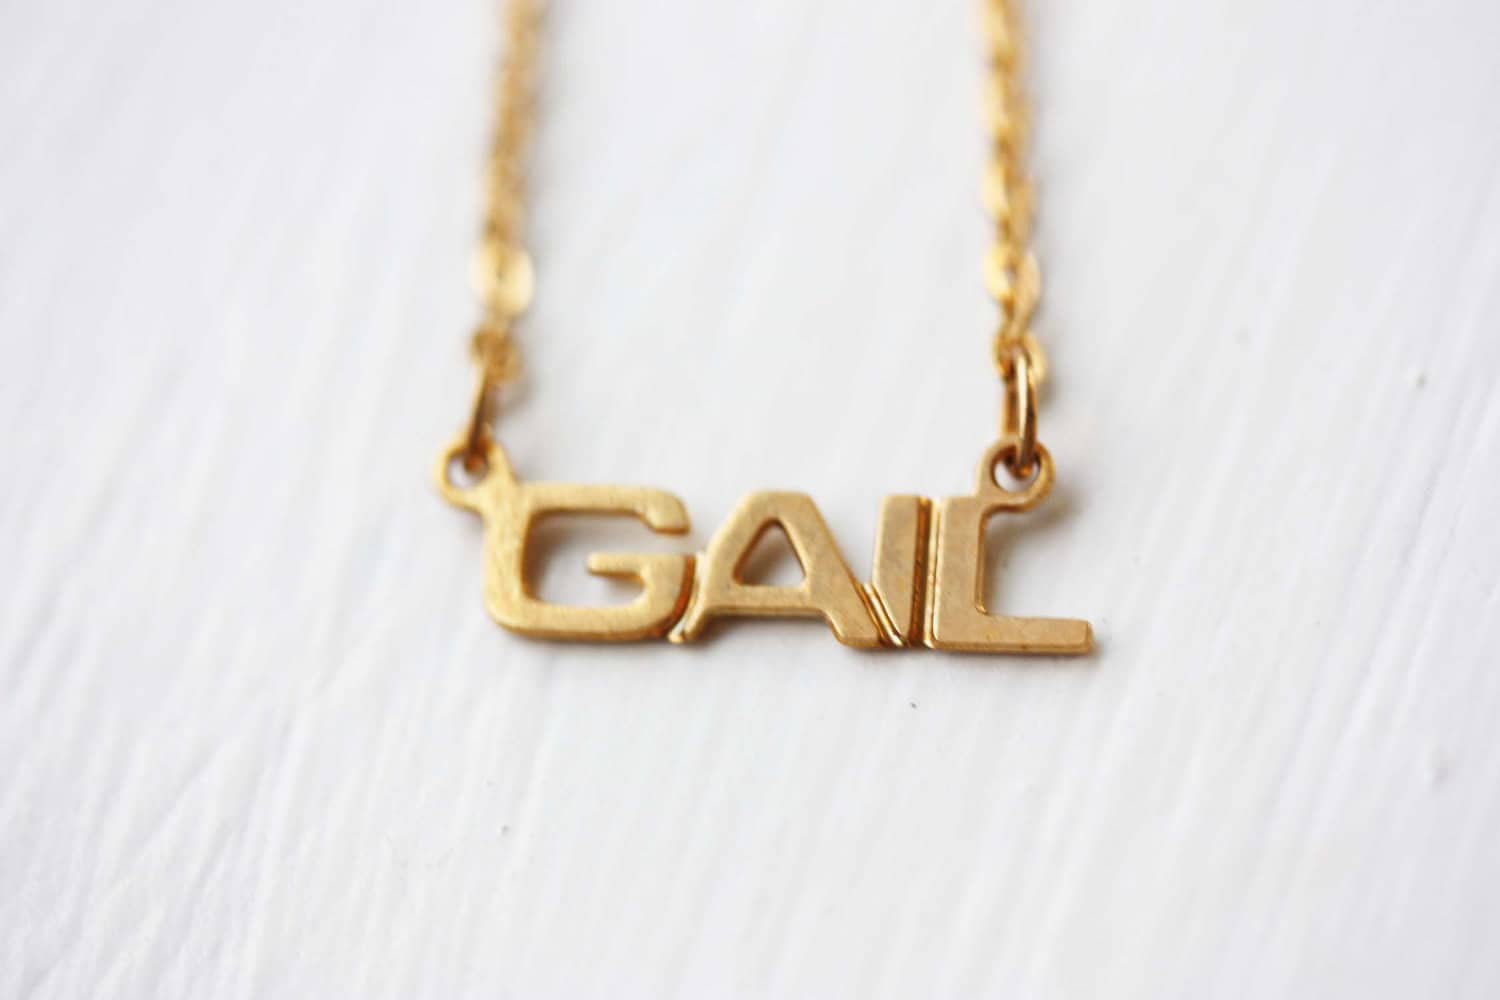 Gail Namenskette Gold, Namenskette, Vintage Goldkette, Halskette von diamentdesigns